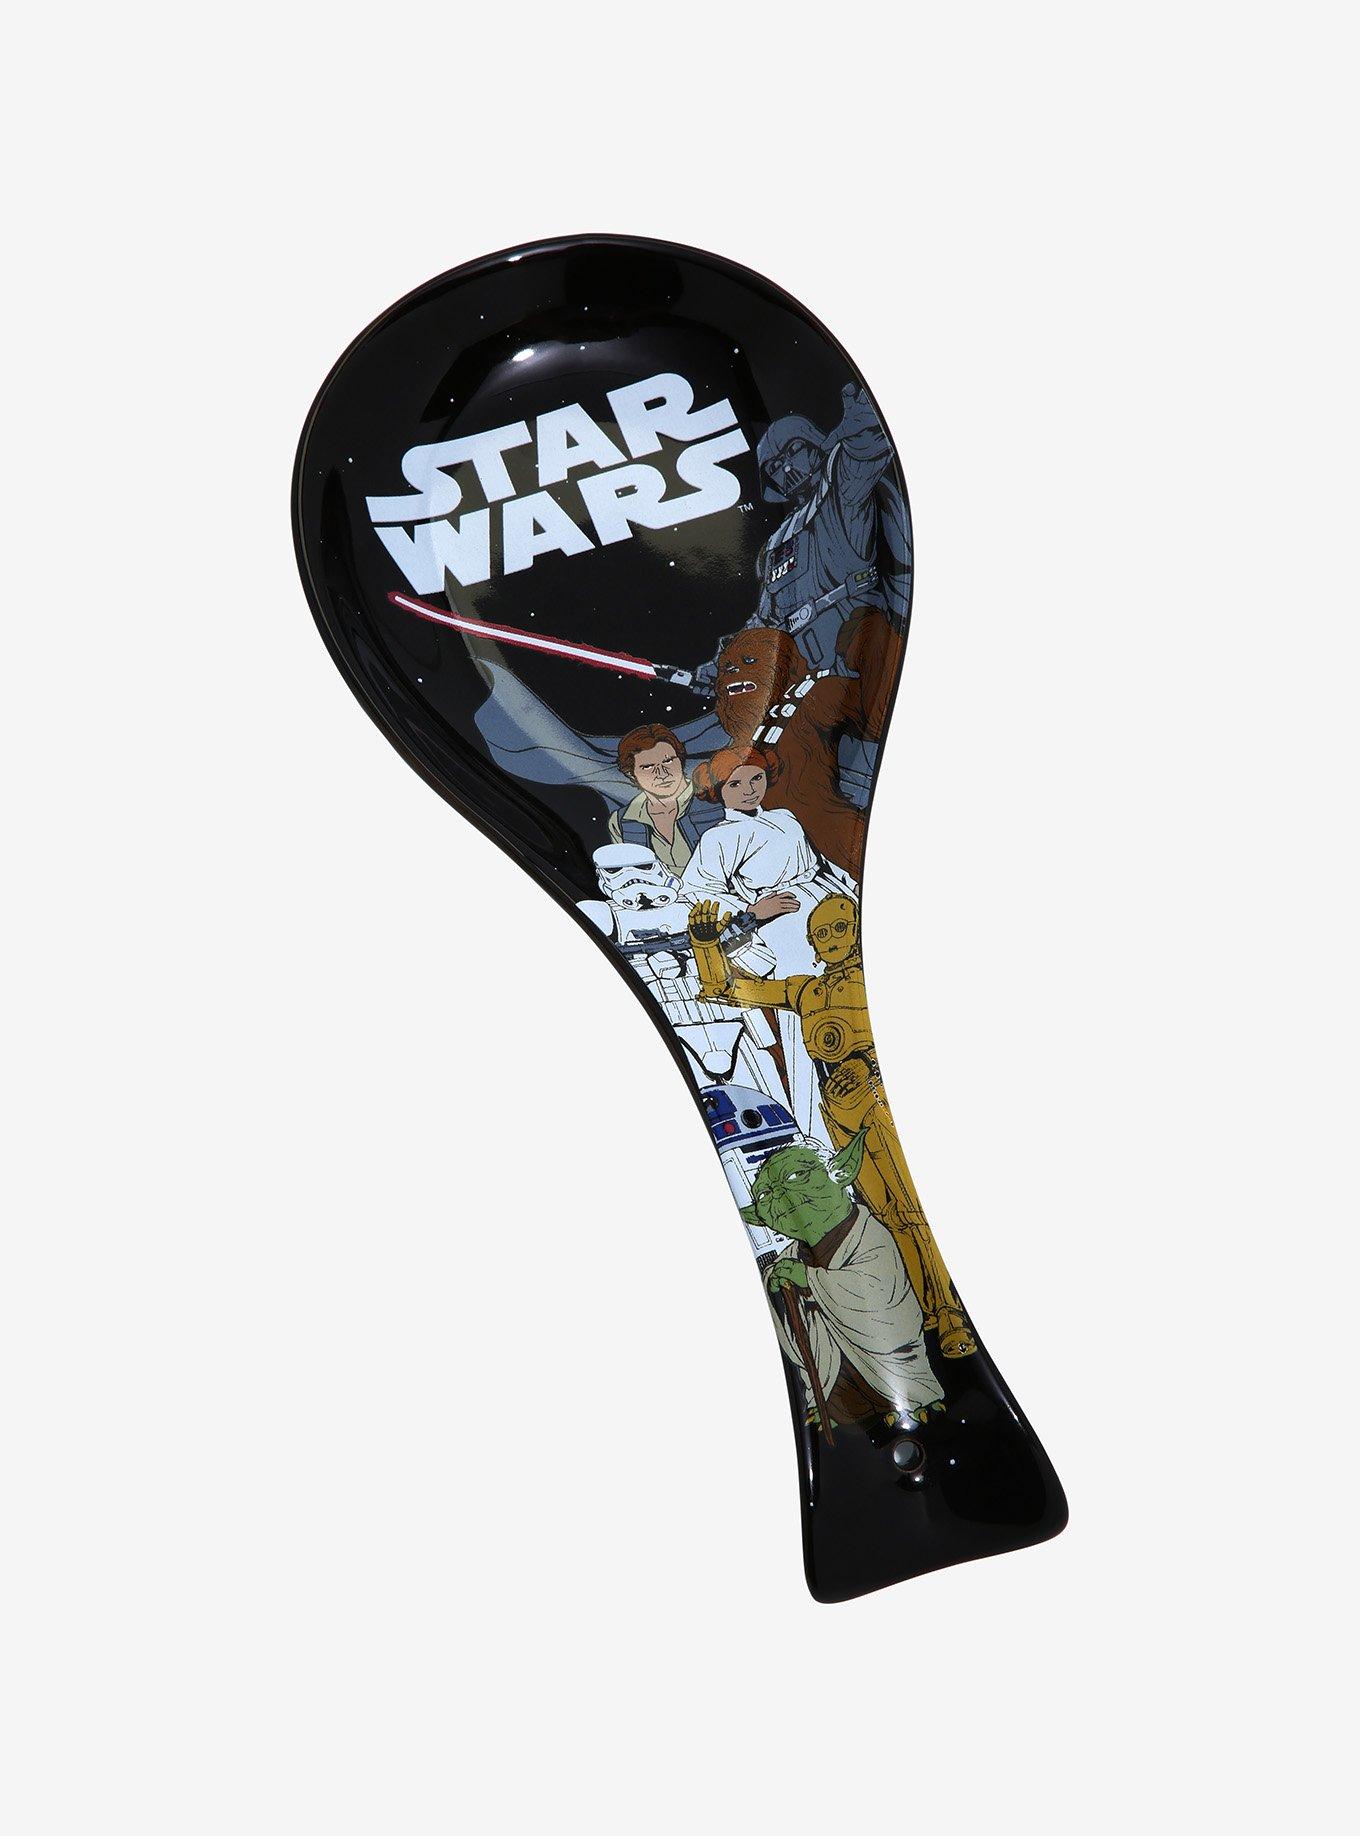 Handmade Star Wars Stormtrooper Ceramic Spoon Rest